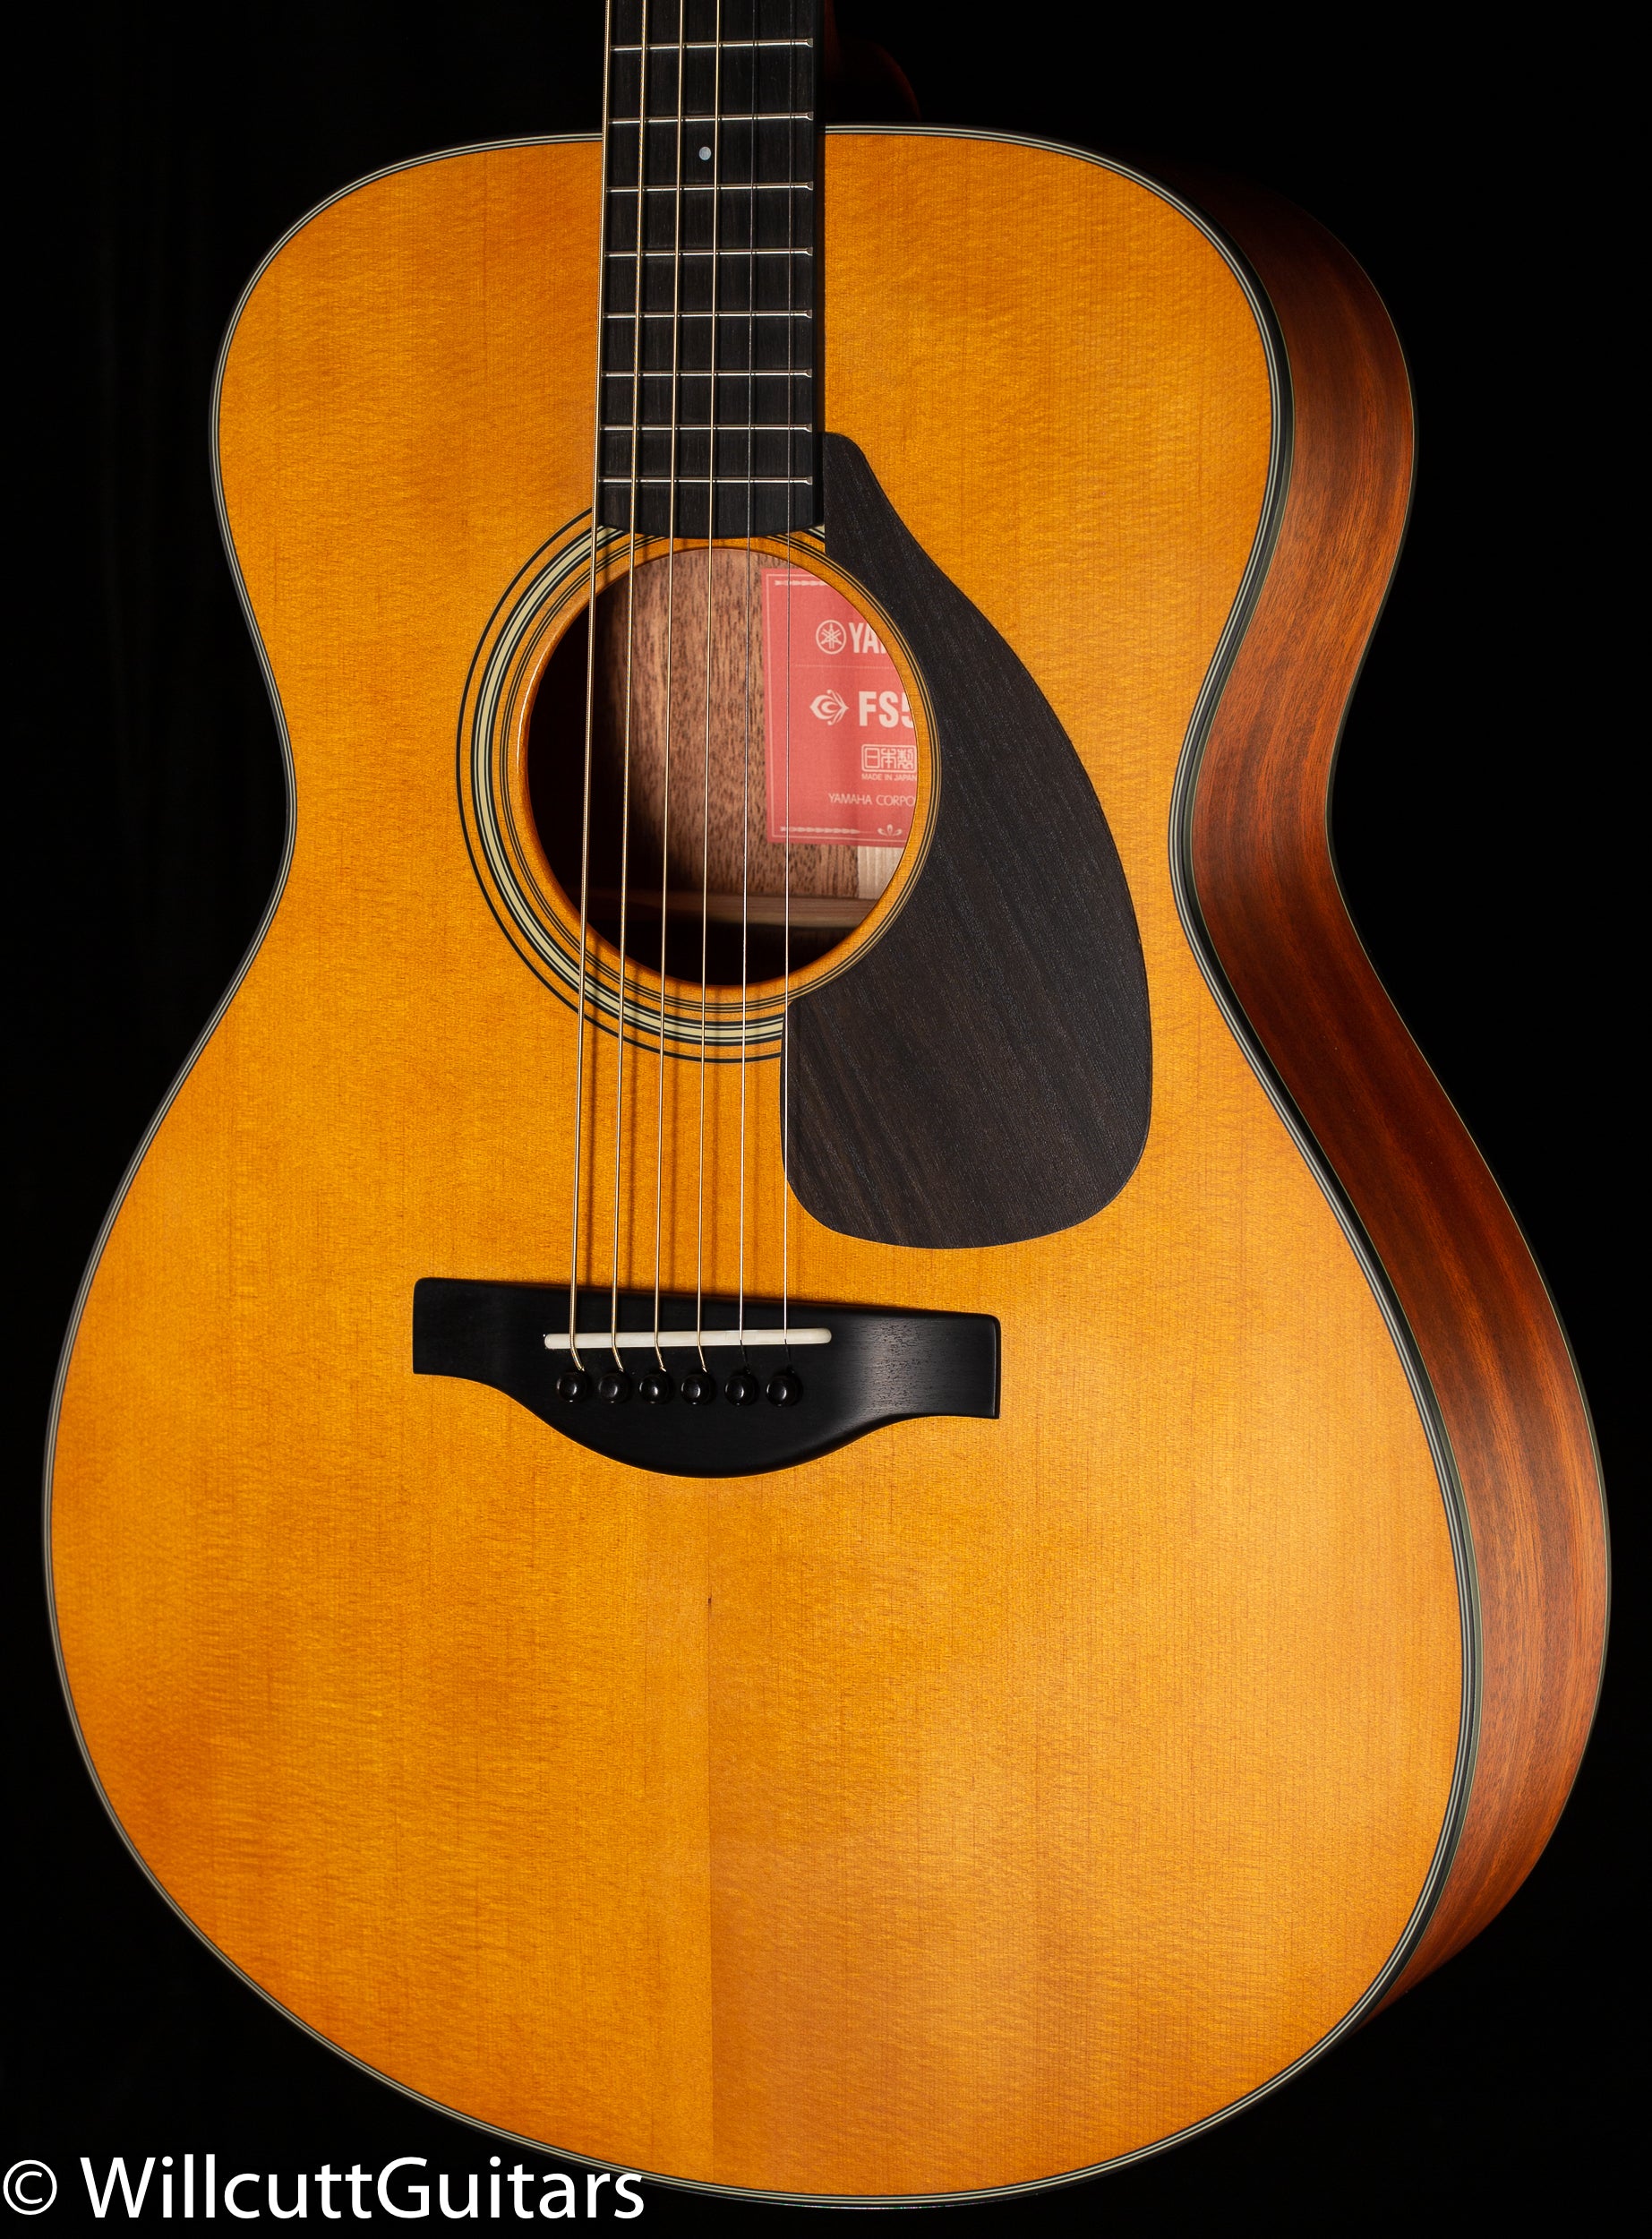 synge Enlighten grænse Yamaha FS5 Red Label Small Body (498A) - Willcutt Guitars